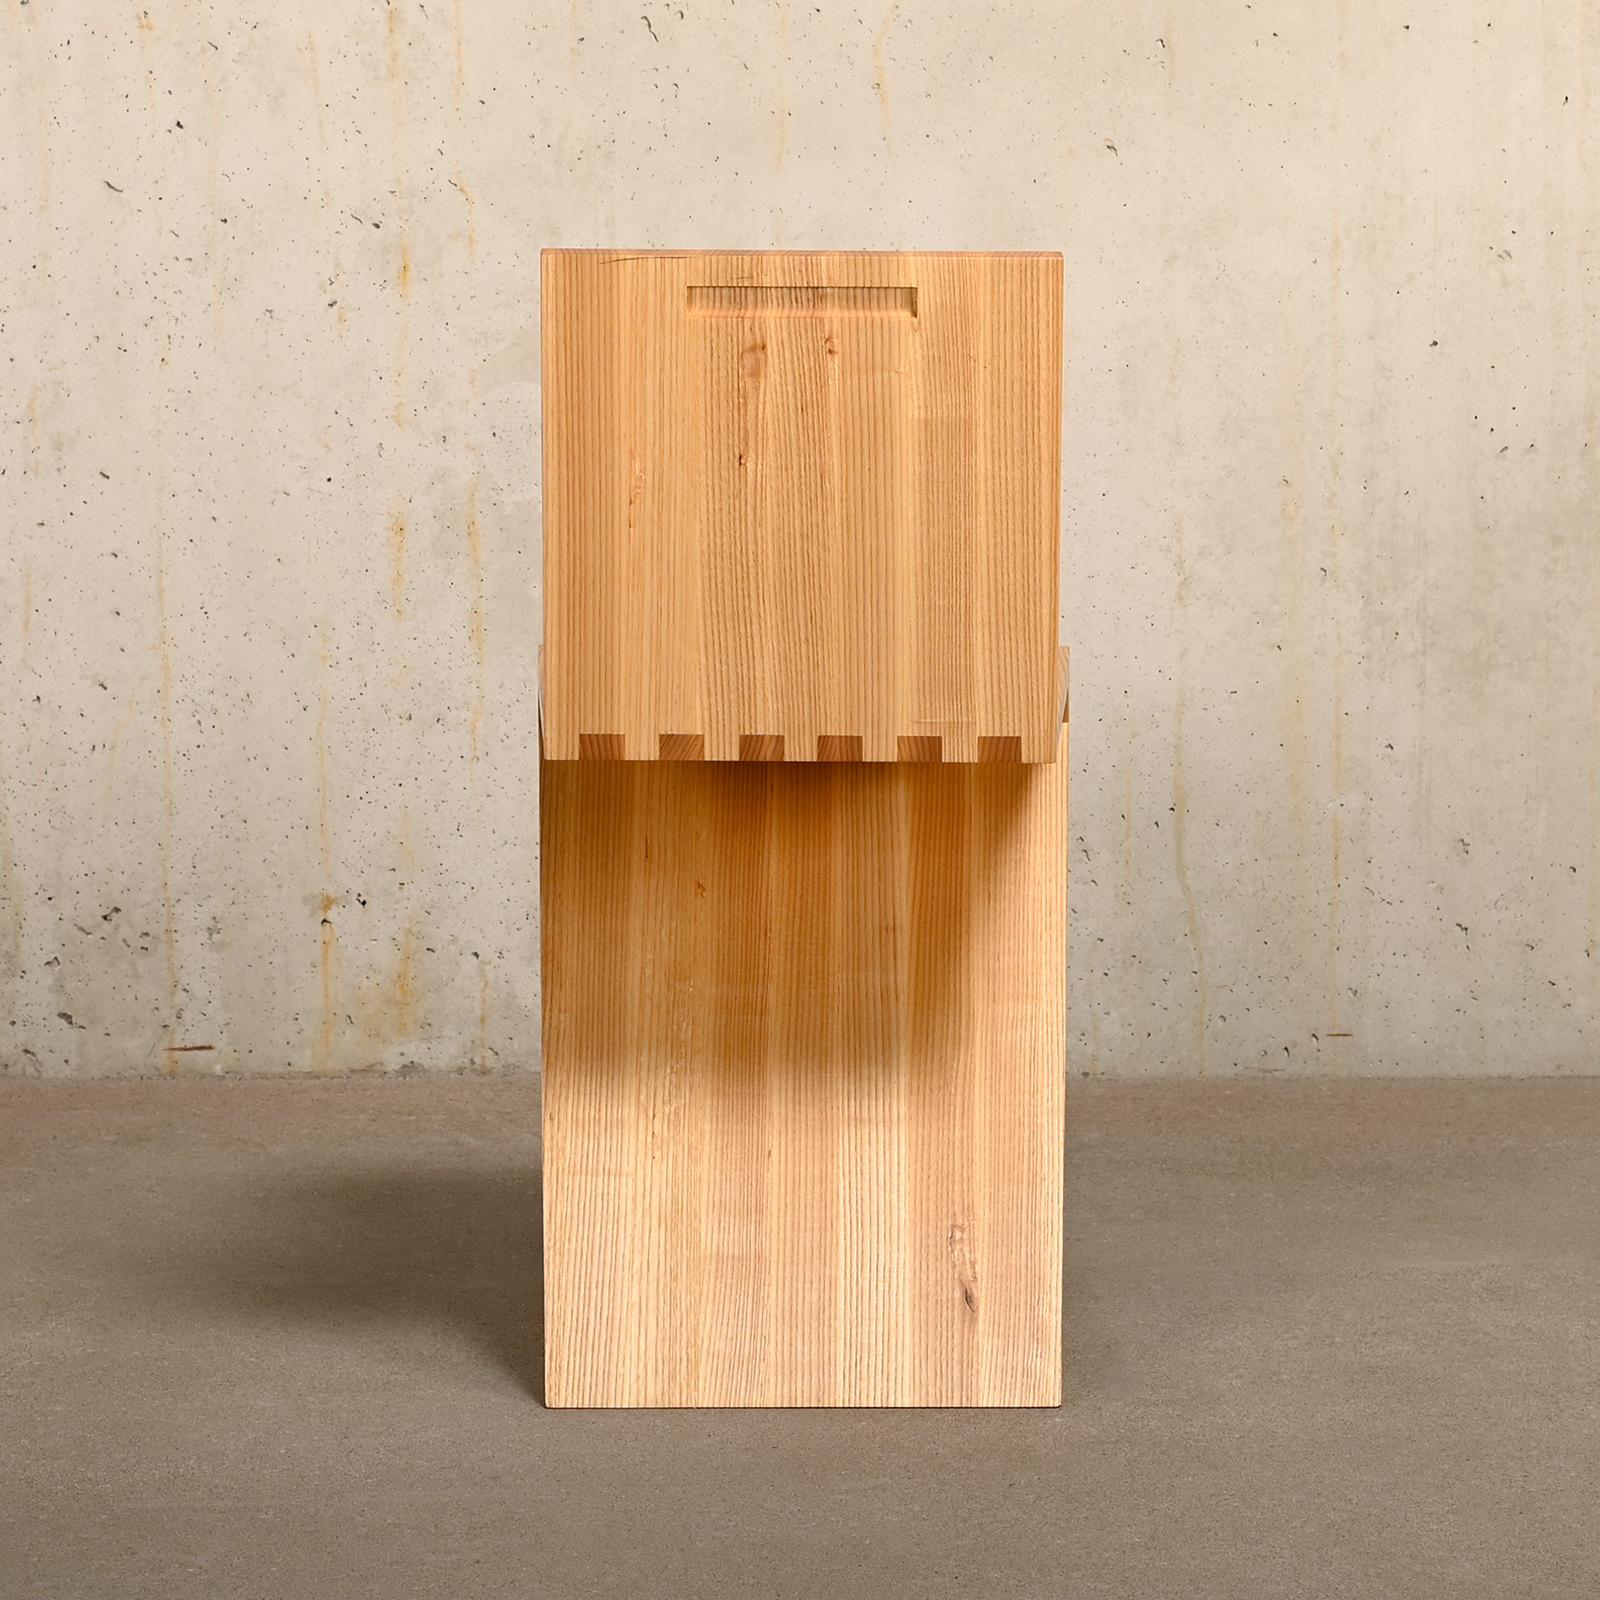 Gerrit Rietveld Zig Zag Chair is Ash wood 1